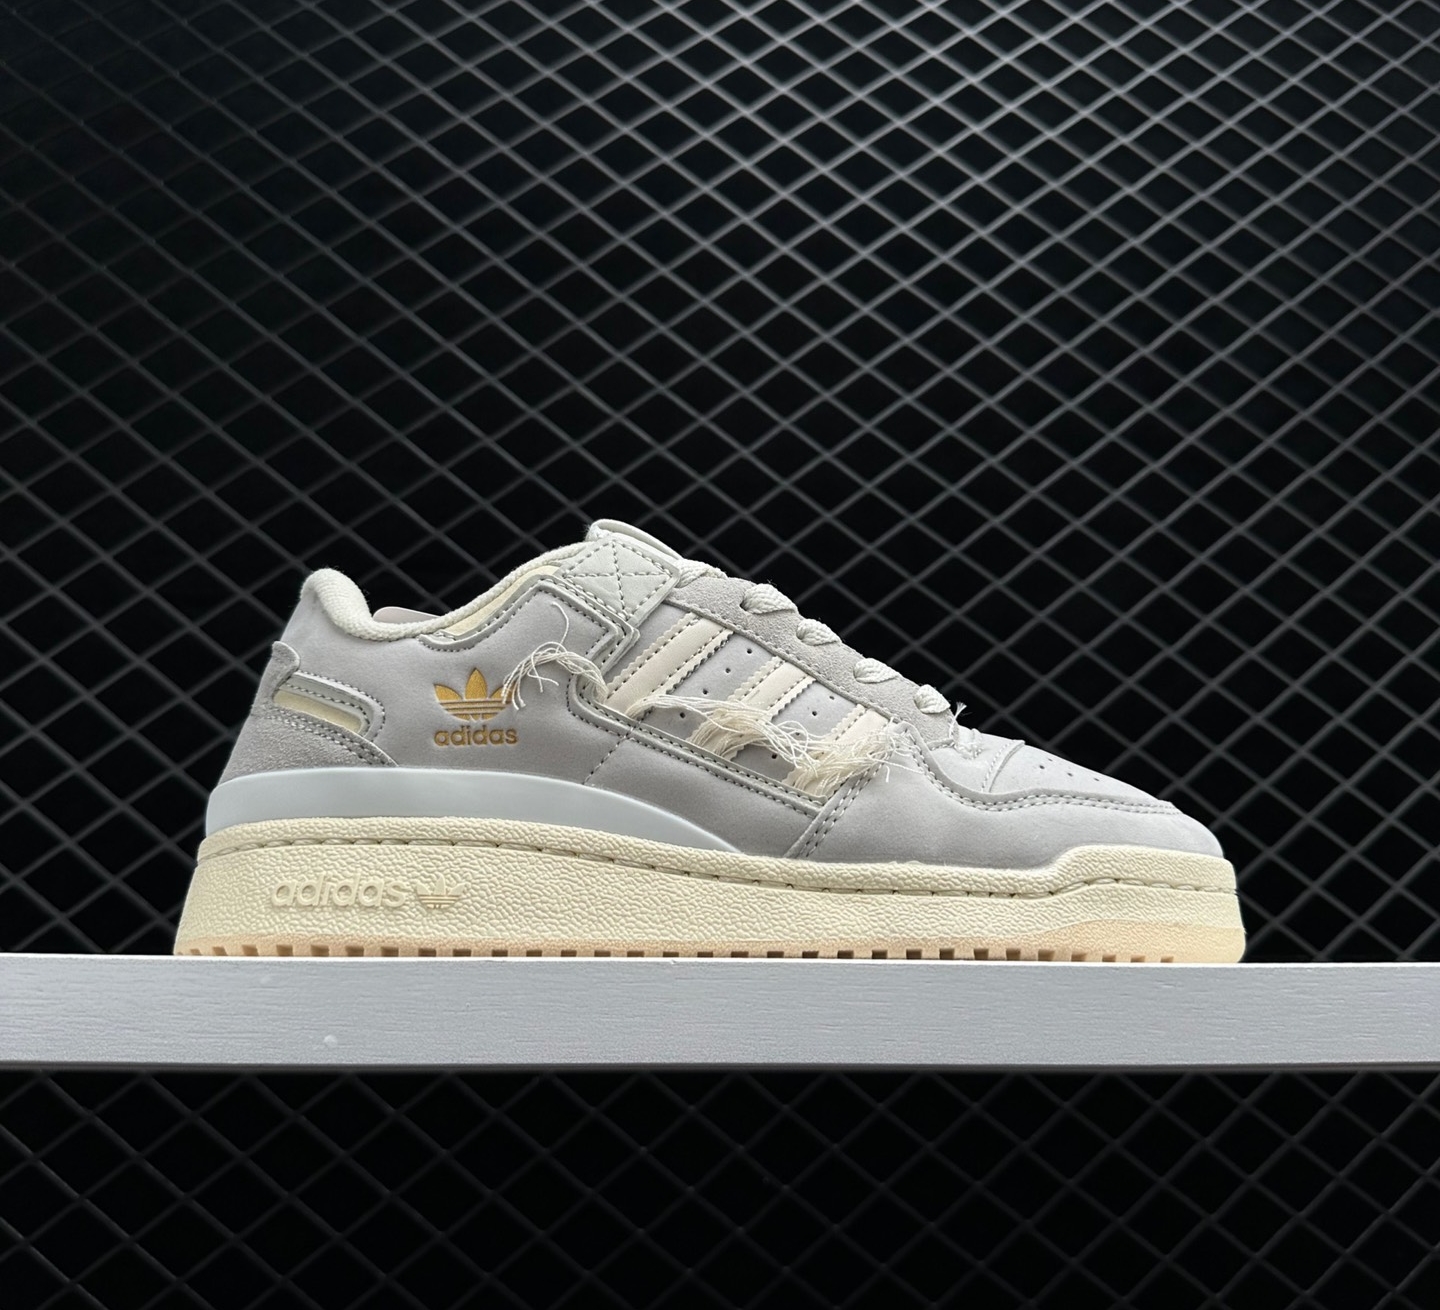 Adidas Forum 84 Low White Gray - Sleek and Modern Footwear